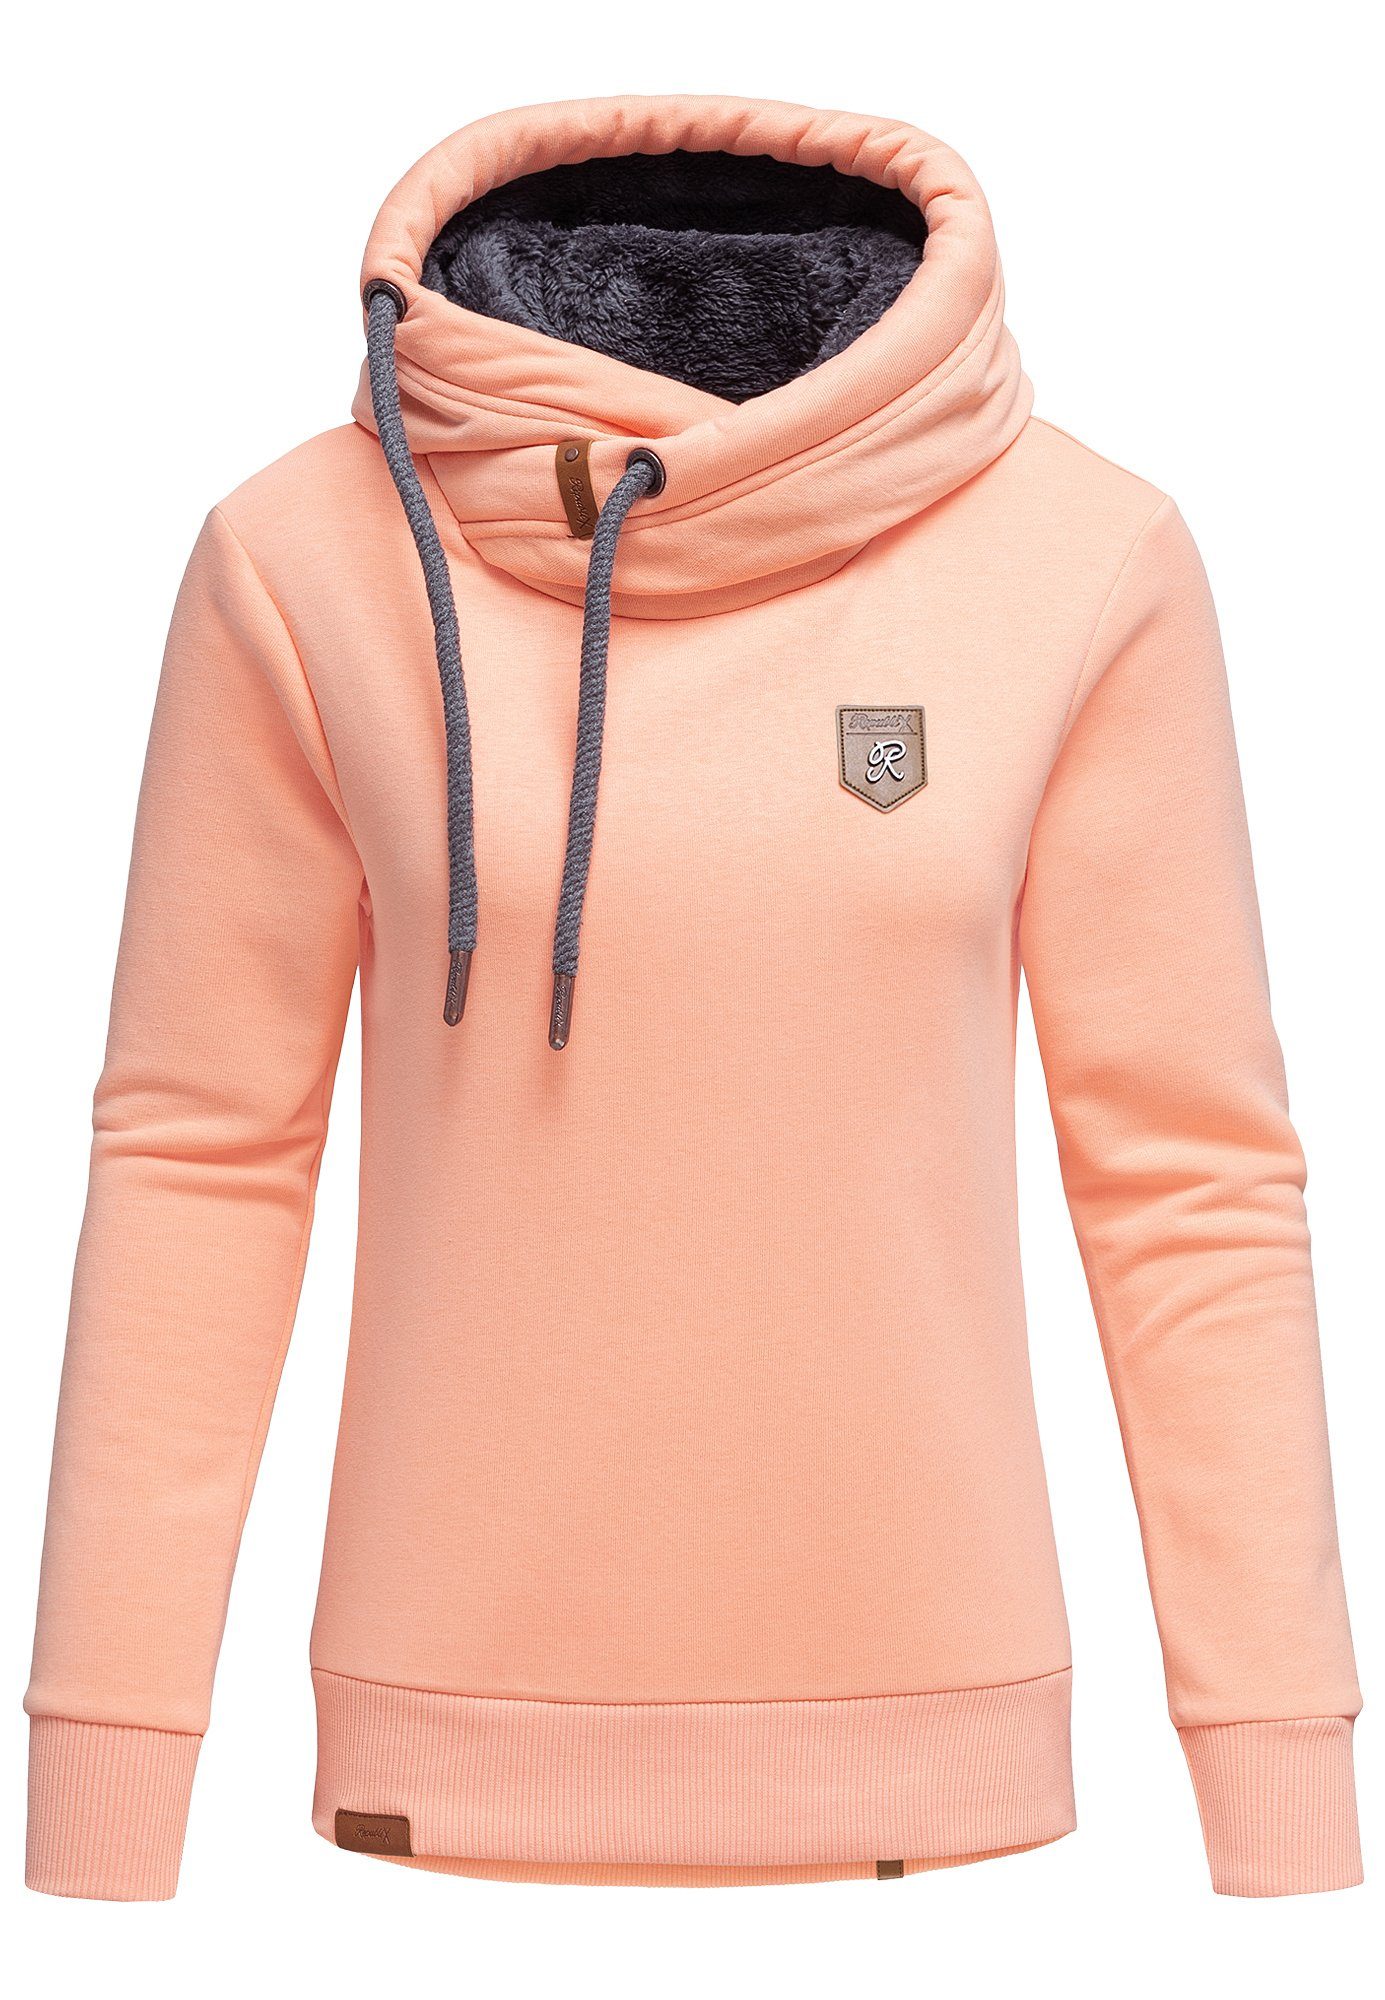 REPUBLIX Sweatshirt »AMELIA« Damen Kapuzenpullover Sweatjacke Pullover  Hoodie online kaufen | OTTO